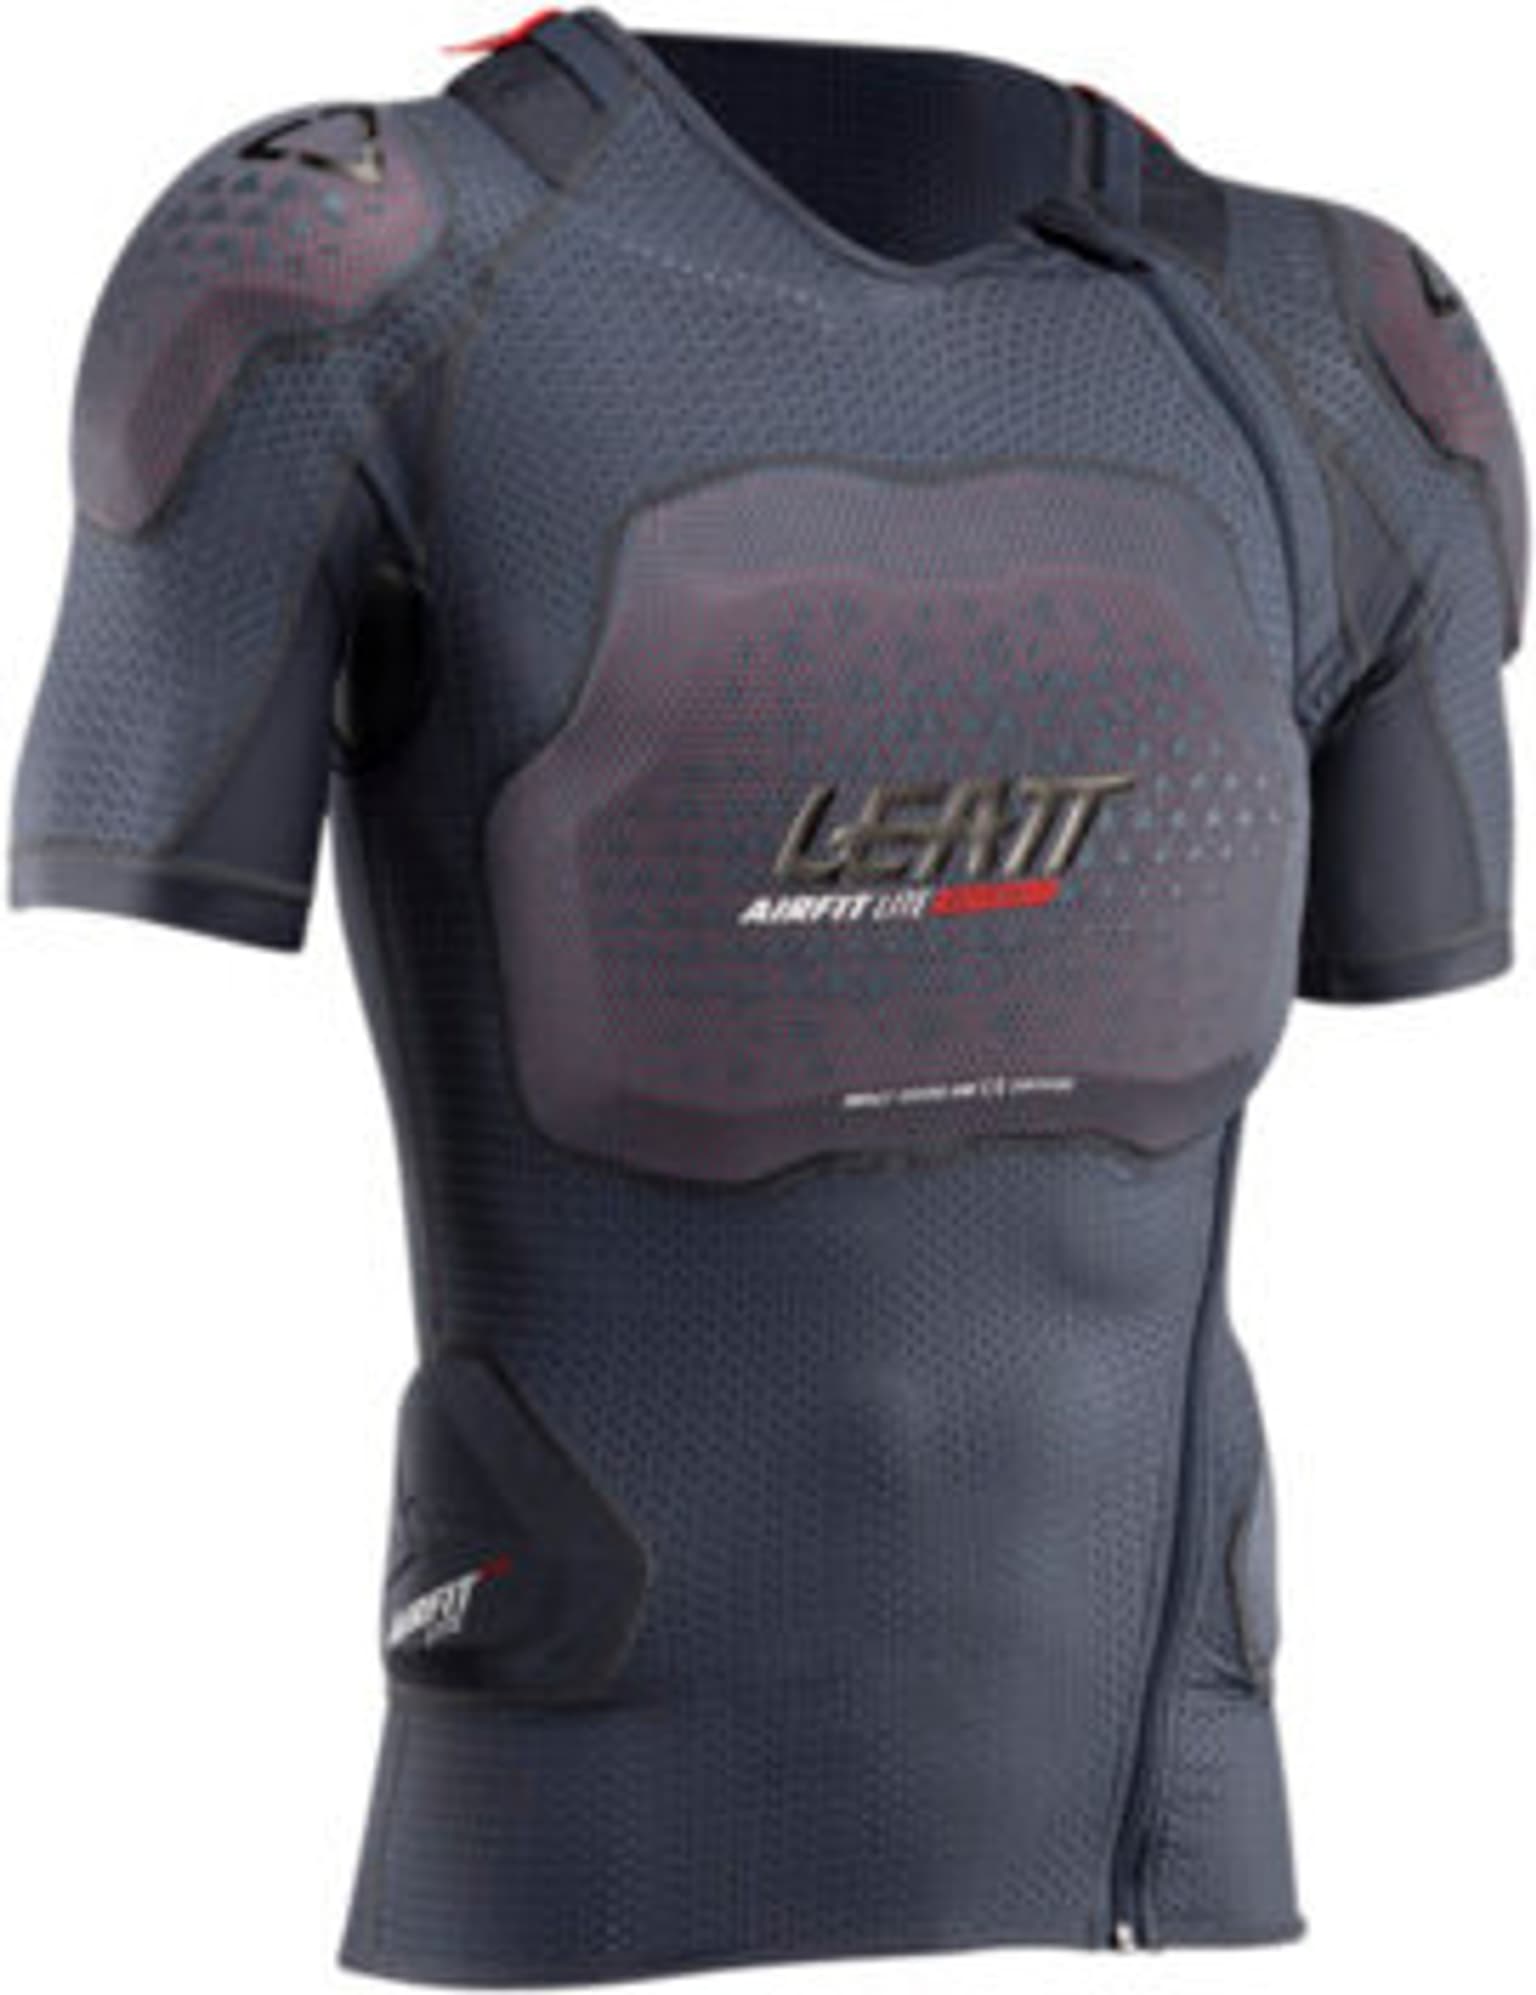 Leatt Leatt Body Tee 3DF AirFit Lite Evo Protections noir 1